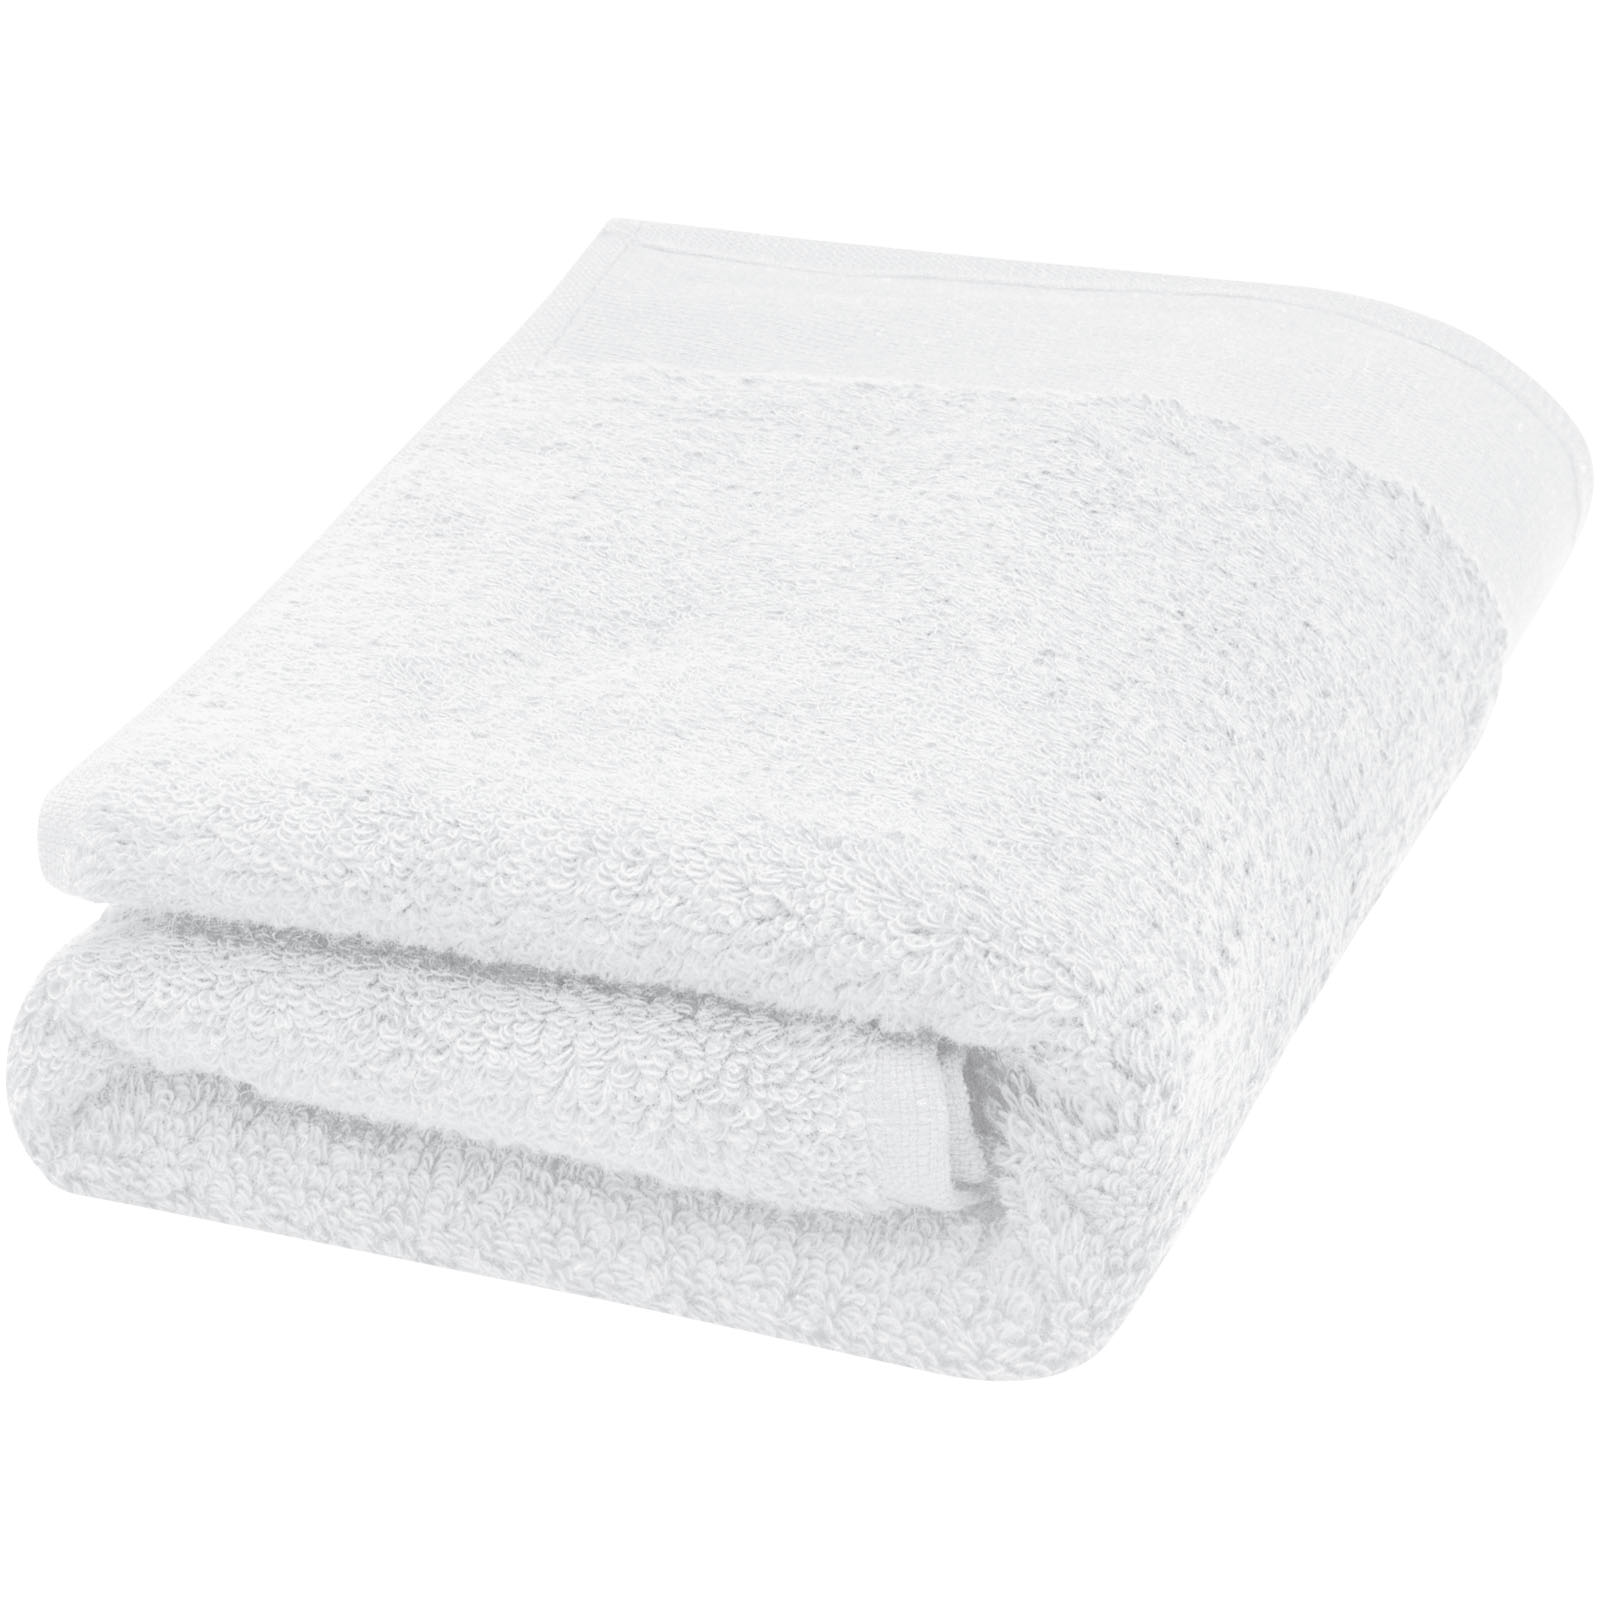 Advertising Towels - Nora 550 g/m² cotton towel 50x100 cm